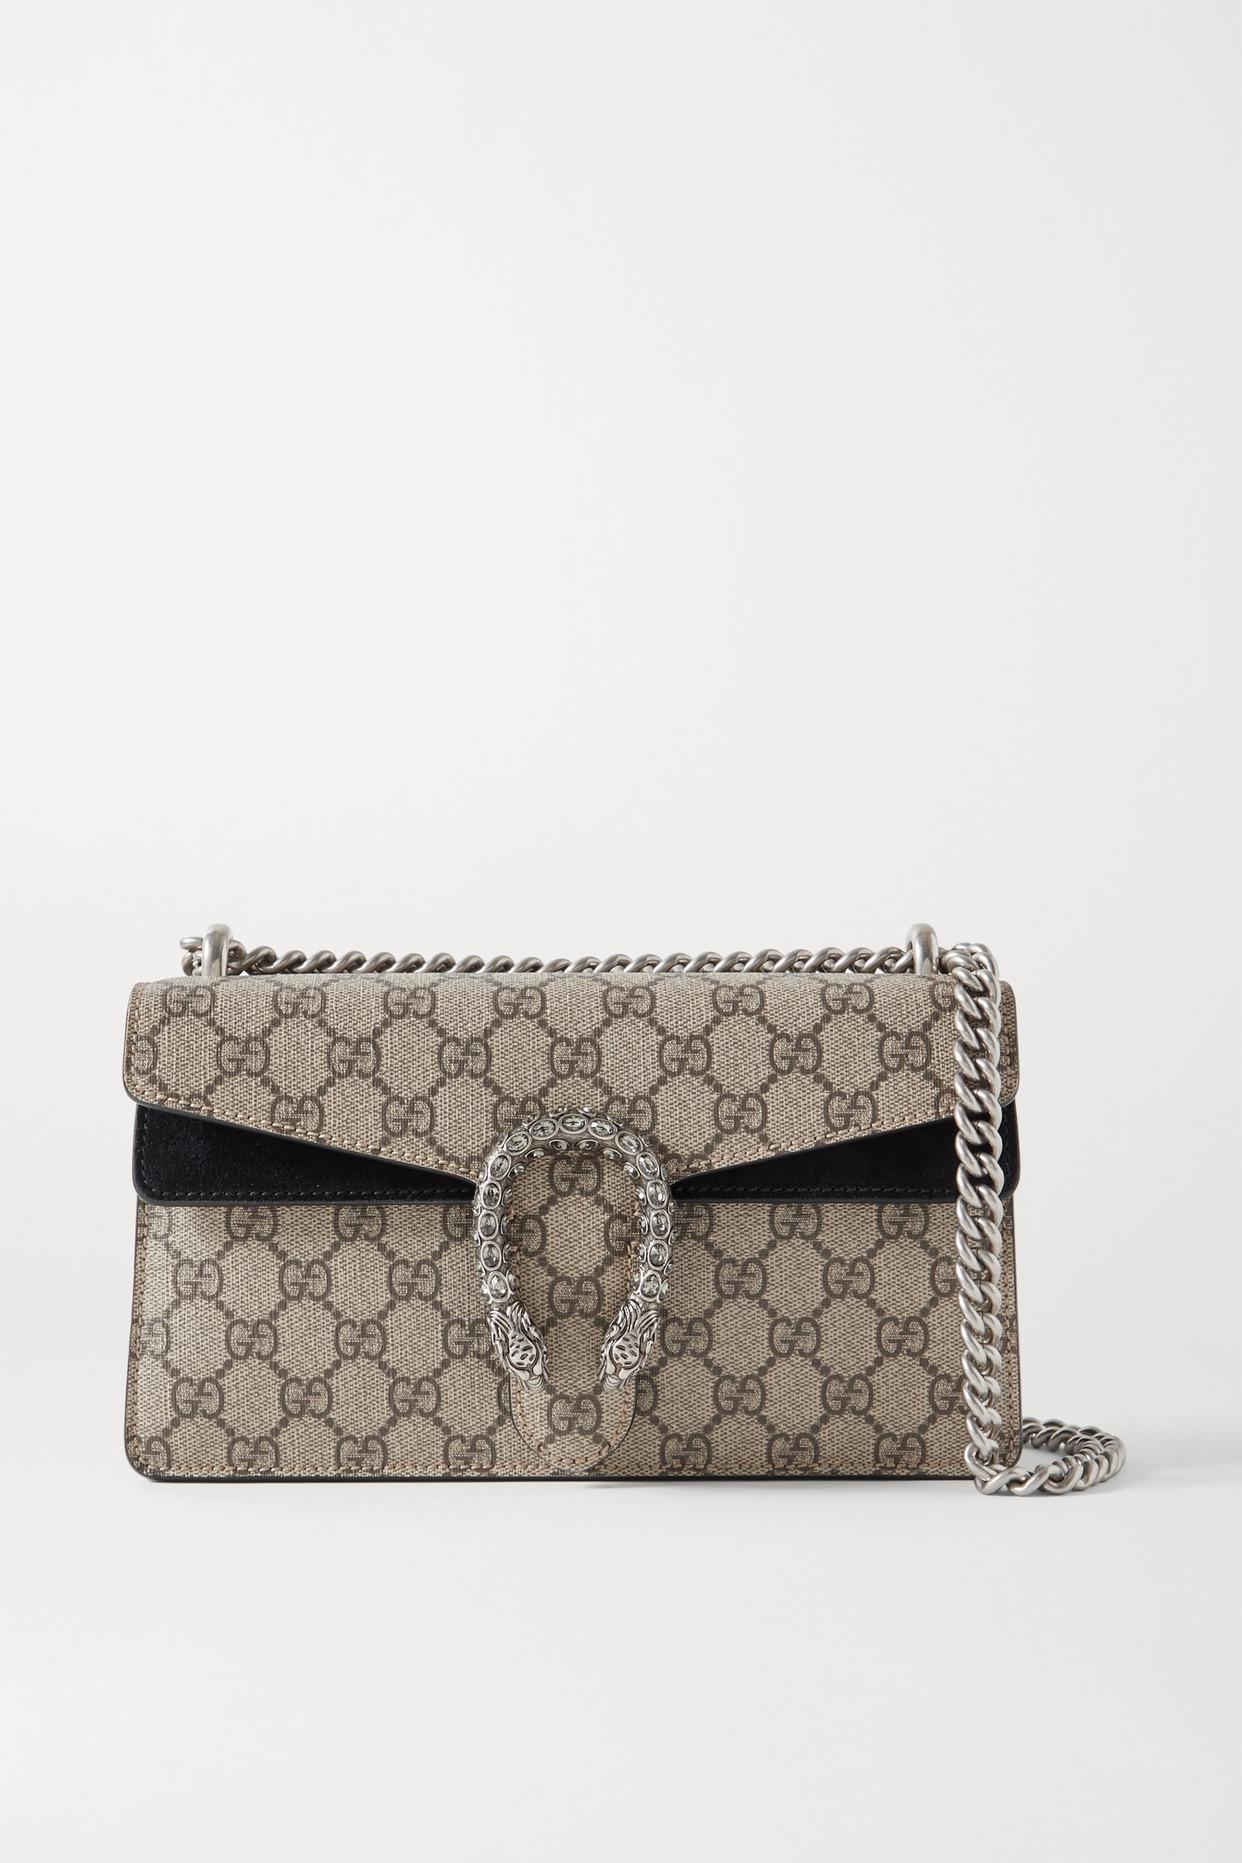 Gucci Dionysus GG Supreme Small Shoulder Bag | Lyst